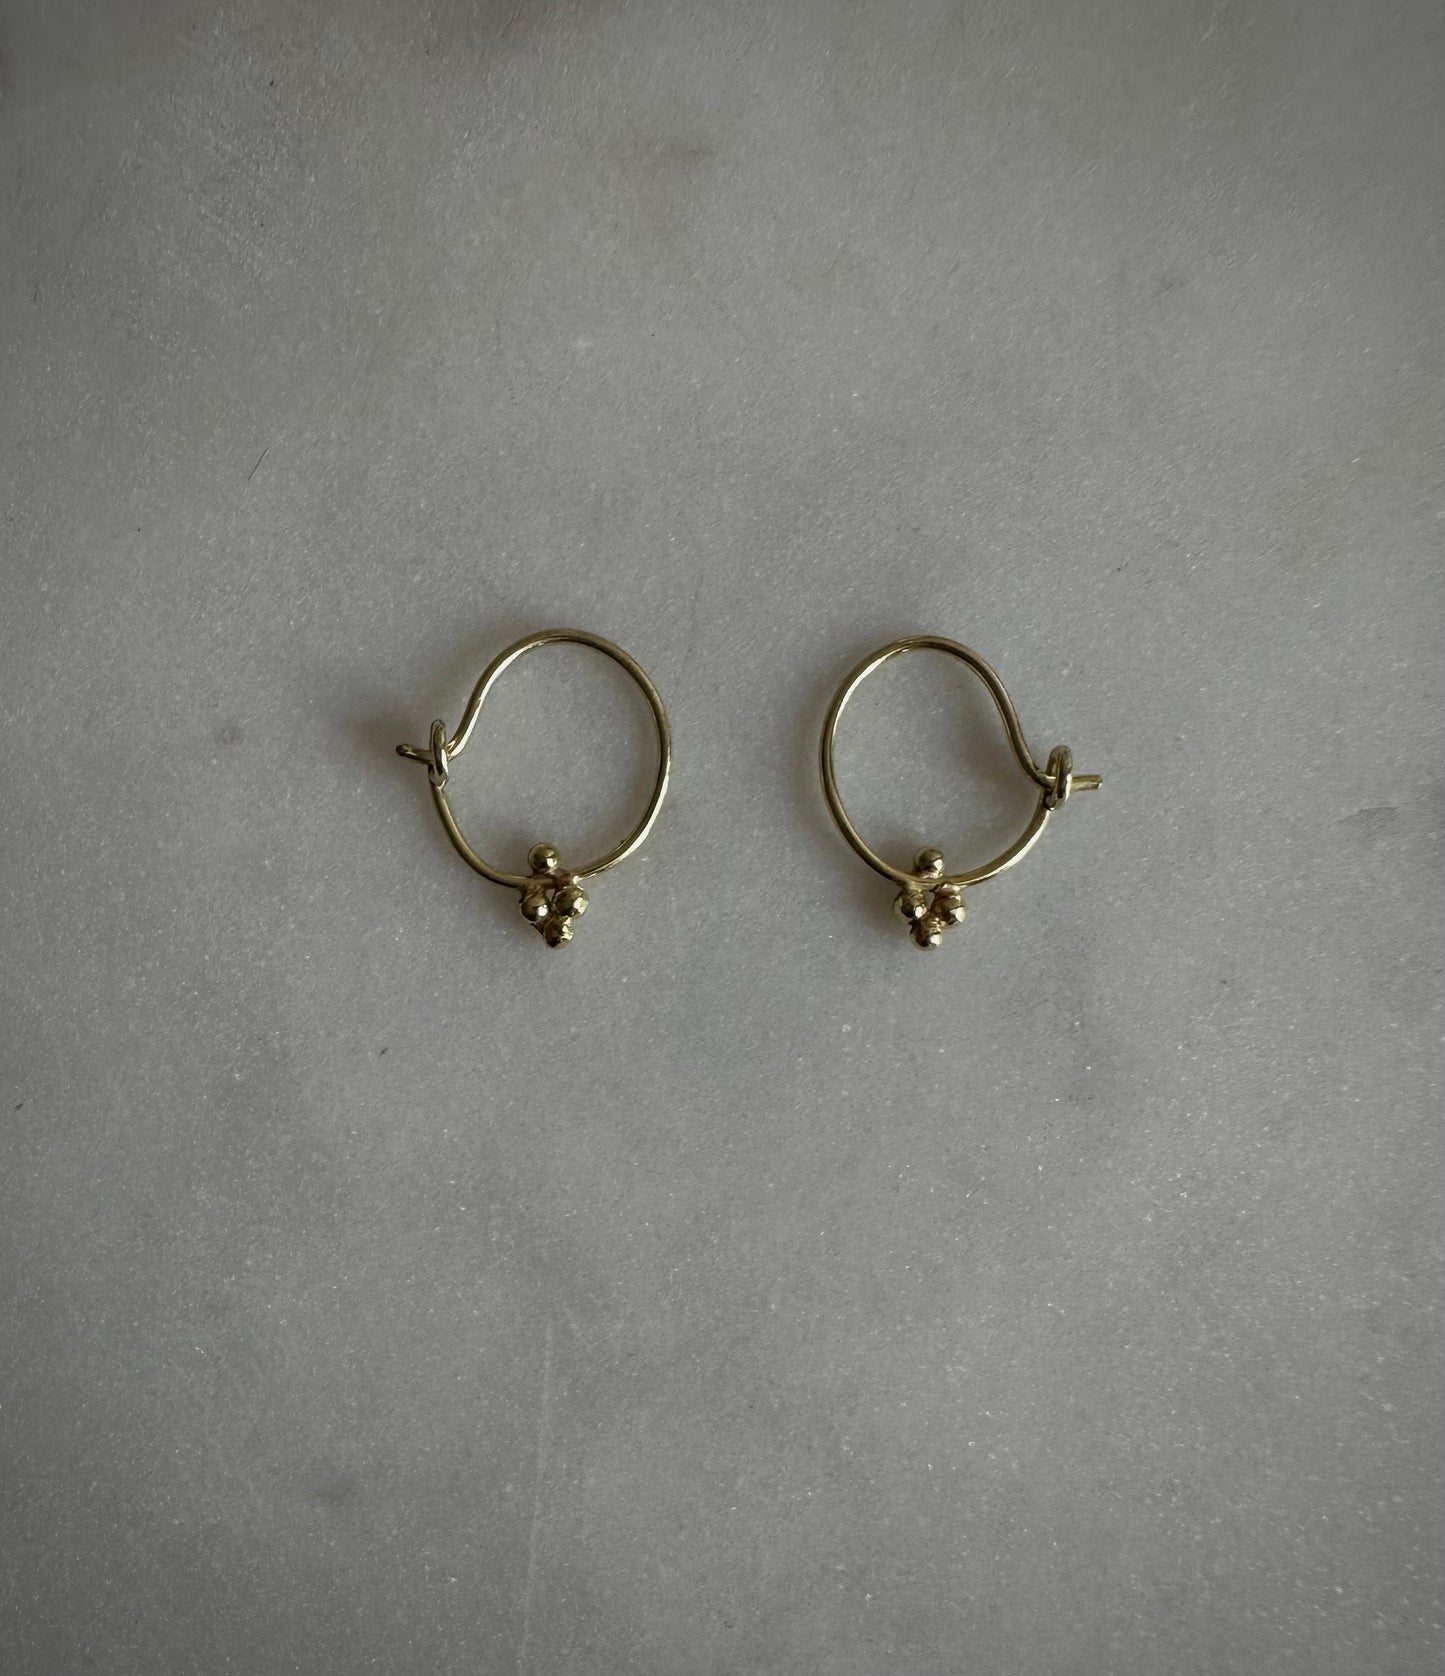 Solid 14k fairtrade gold earrings